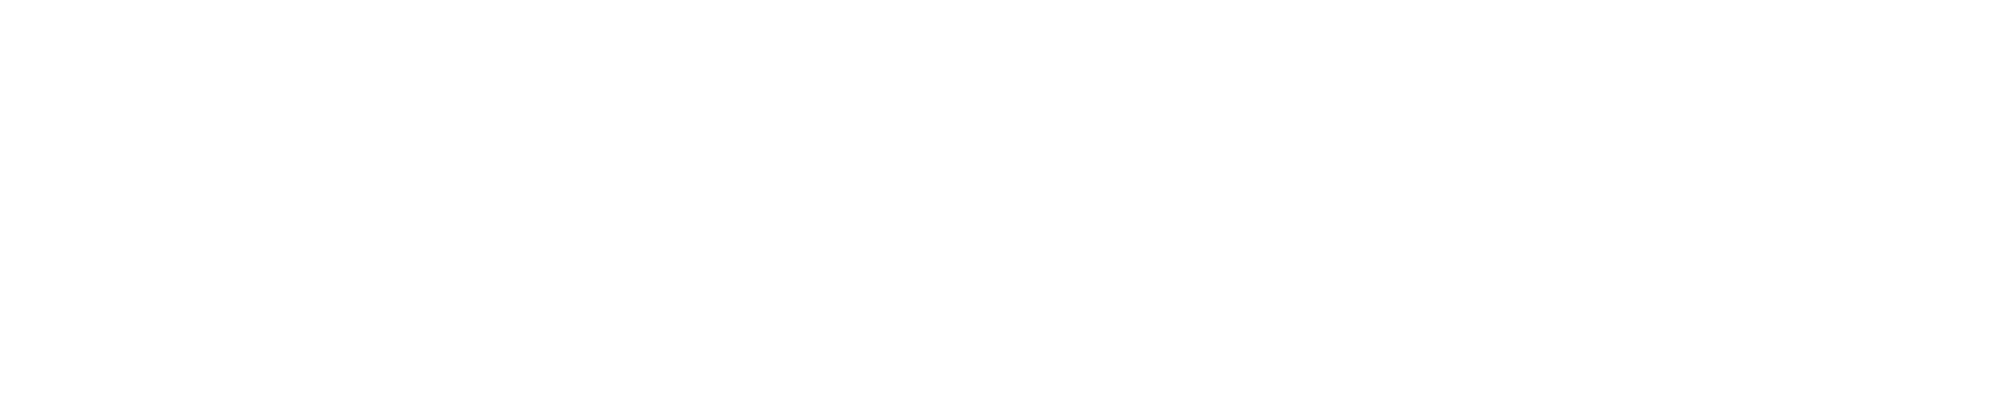 Rackspace Government Solutions logo